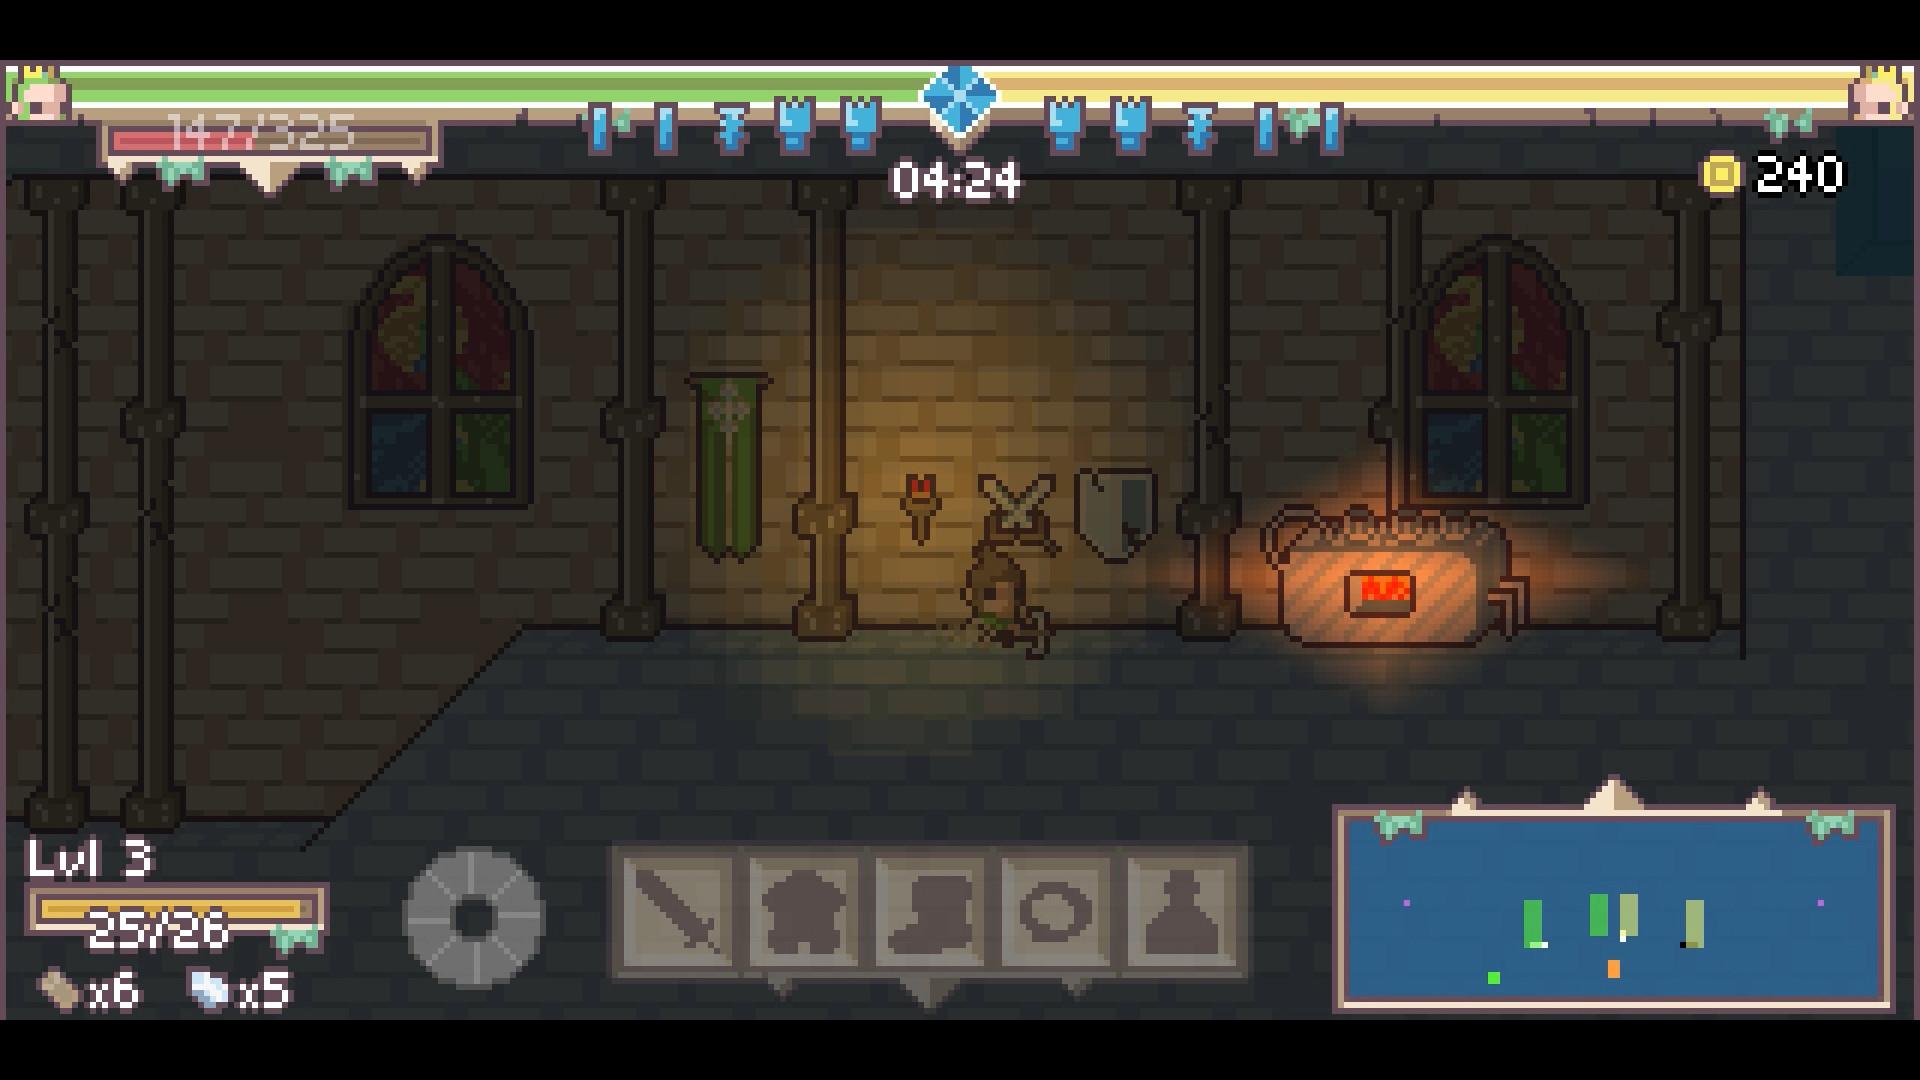 Screenshot №3 from game Take Thy Throne